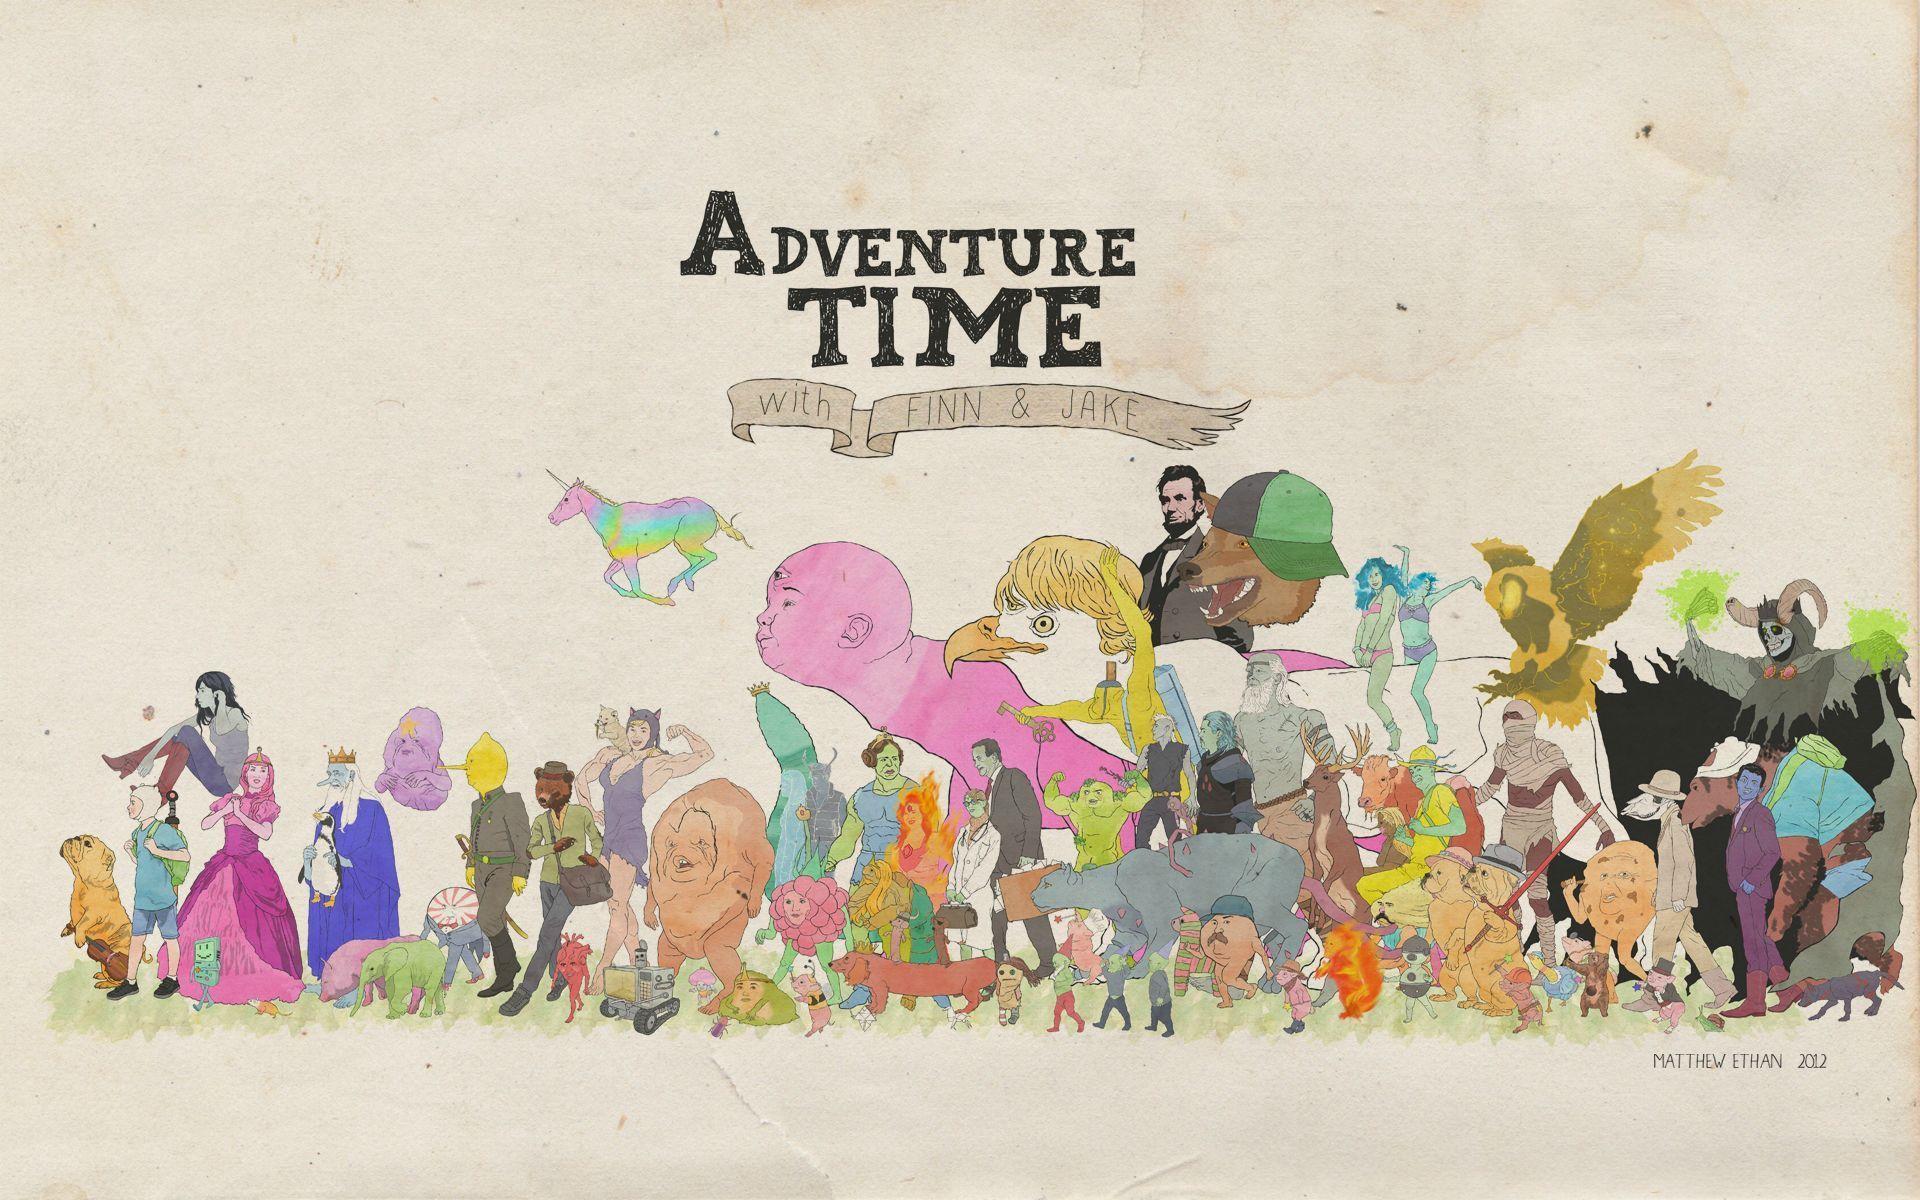 amazing wallpaper. Adventure time wallpaper, Adventure time